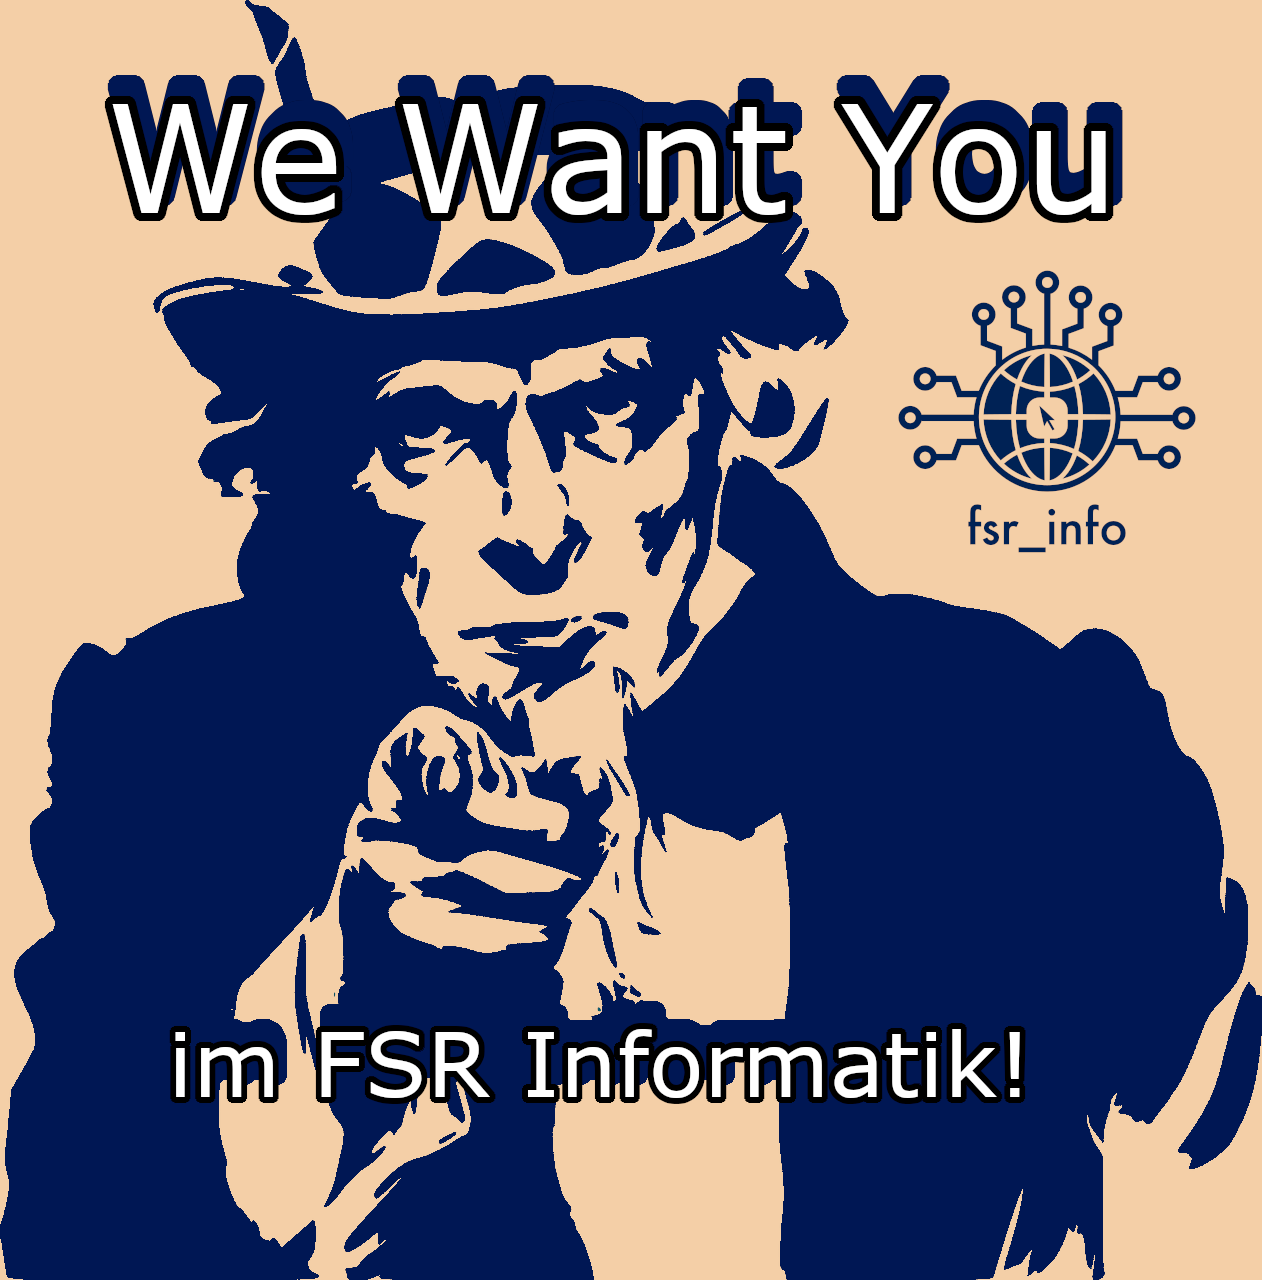 We Want You im FSR Informatik!